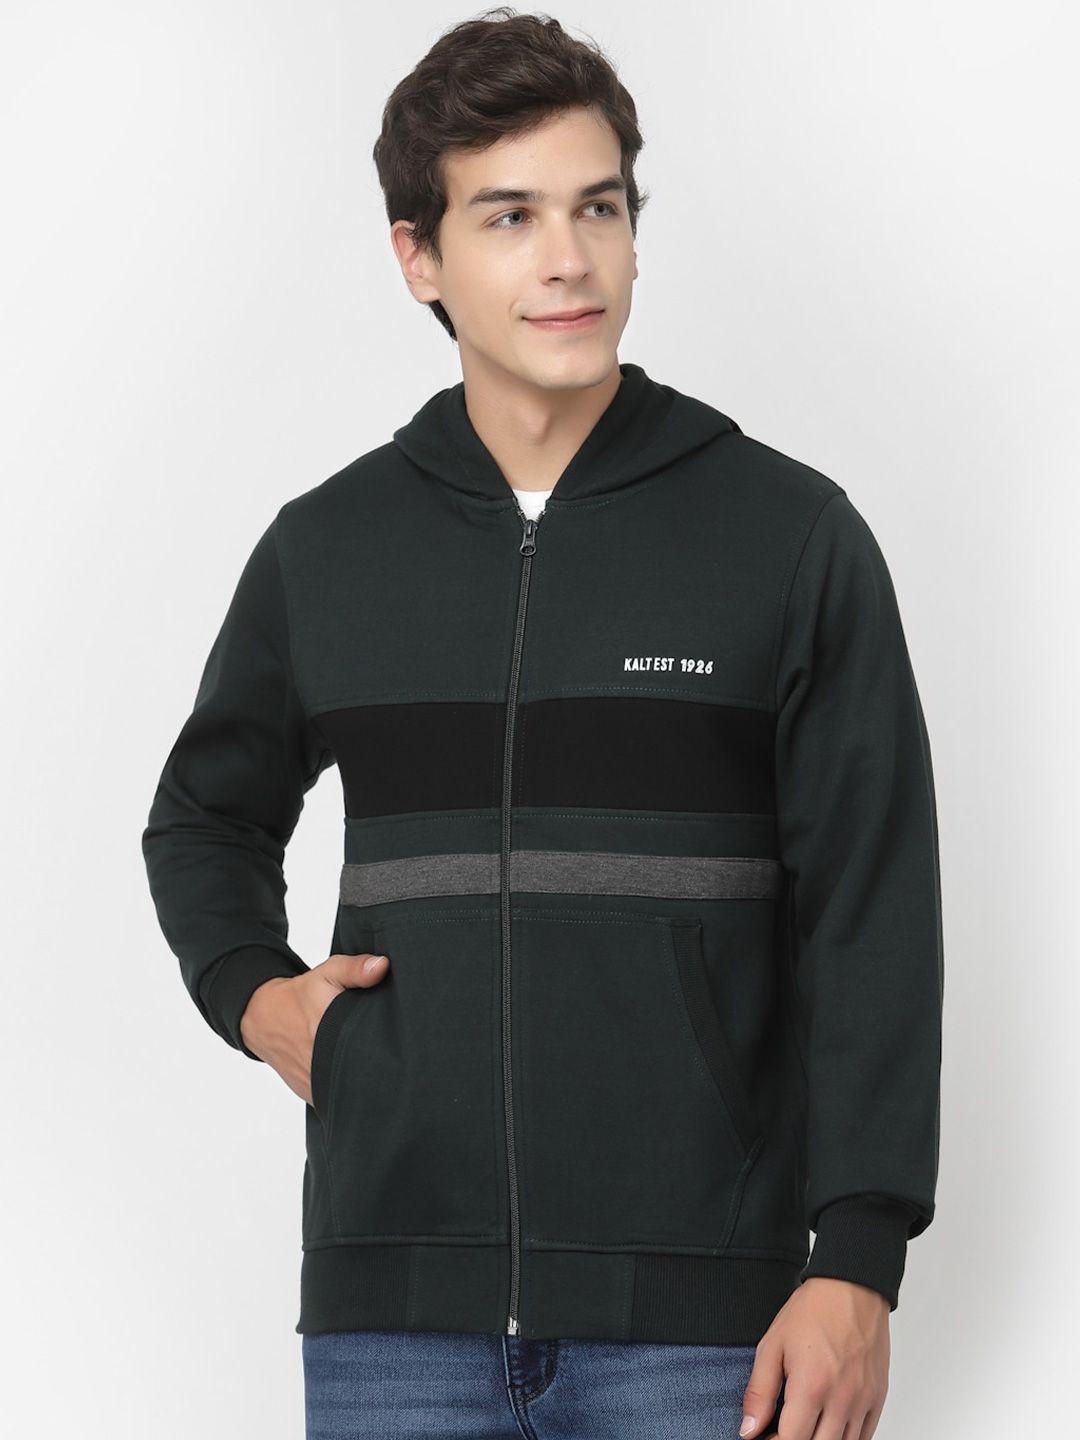 kalt-colourblocked-hooded-fleece-sweatshirt